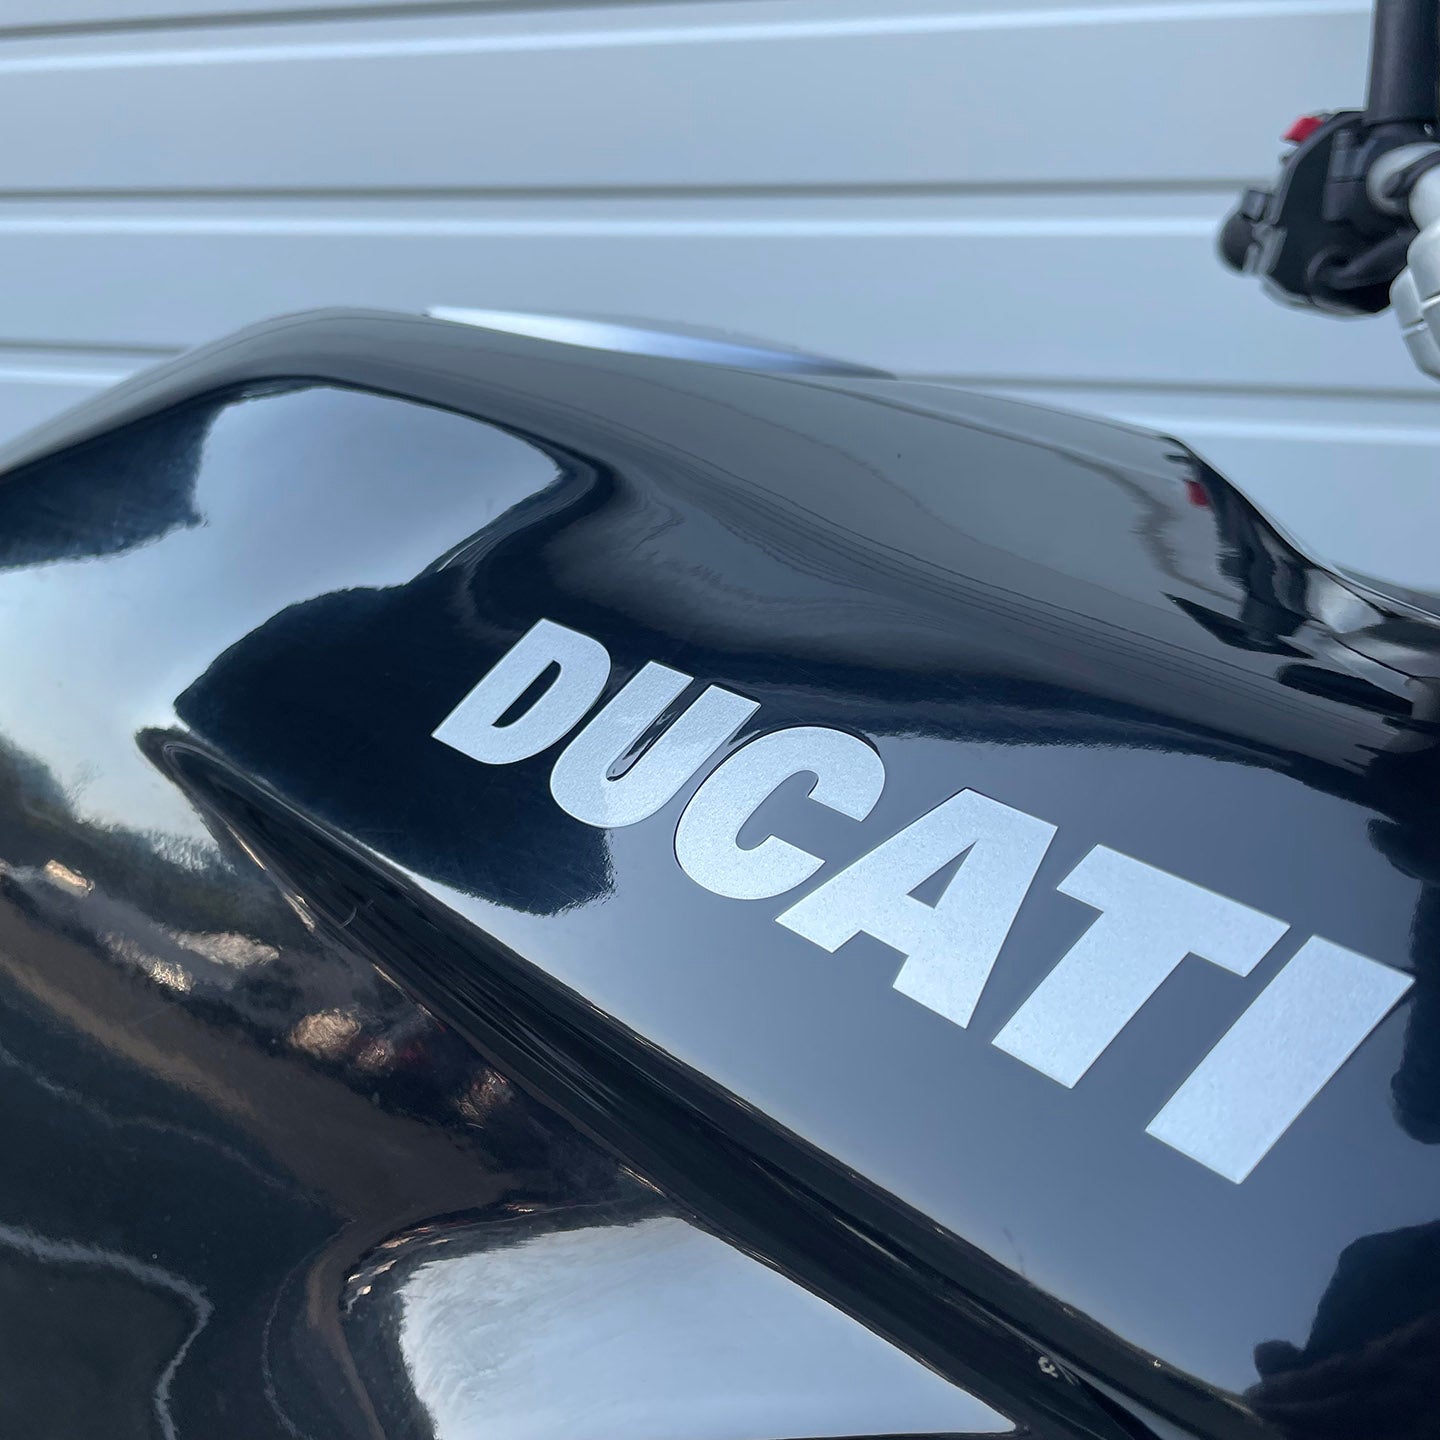 2008 Ducati Multistrada 1100S (1,883 Miles)